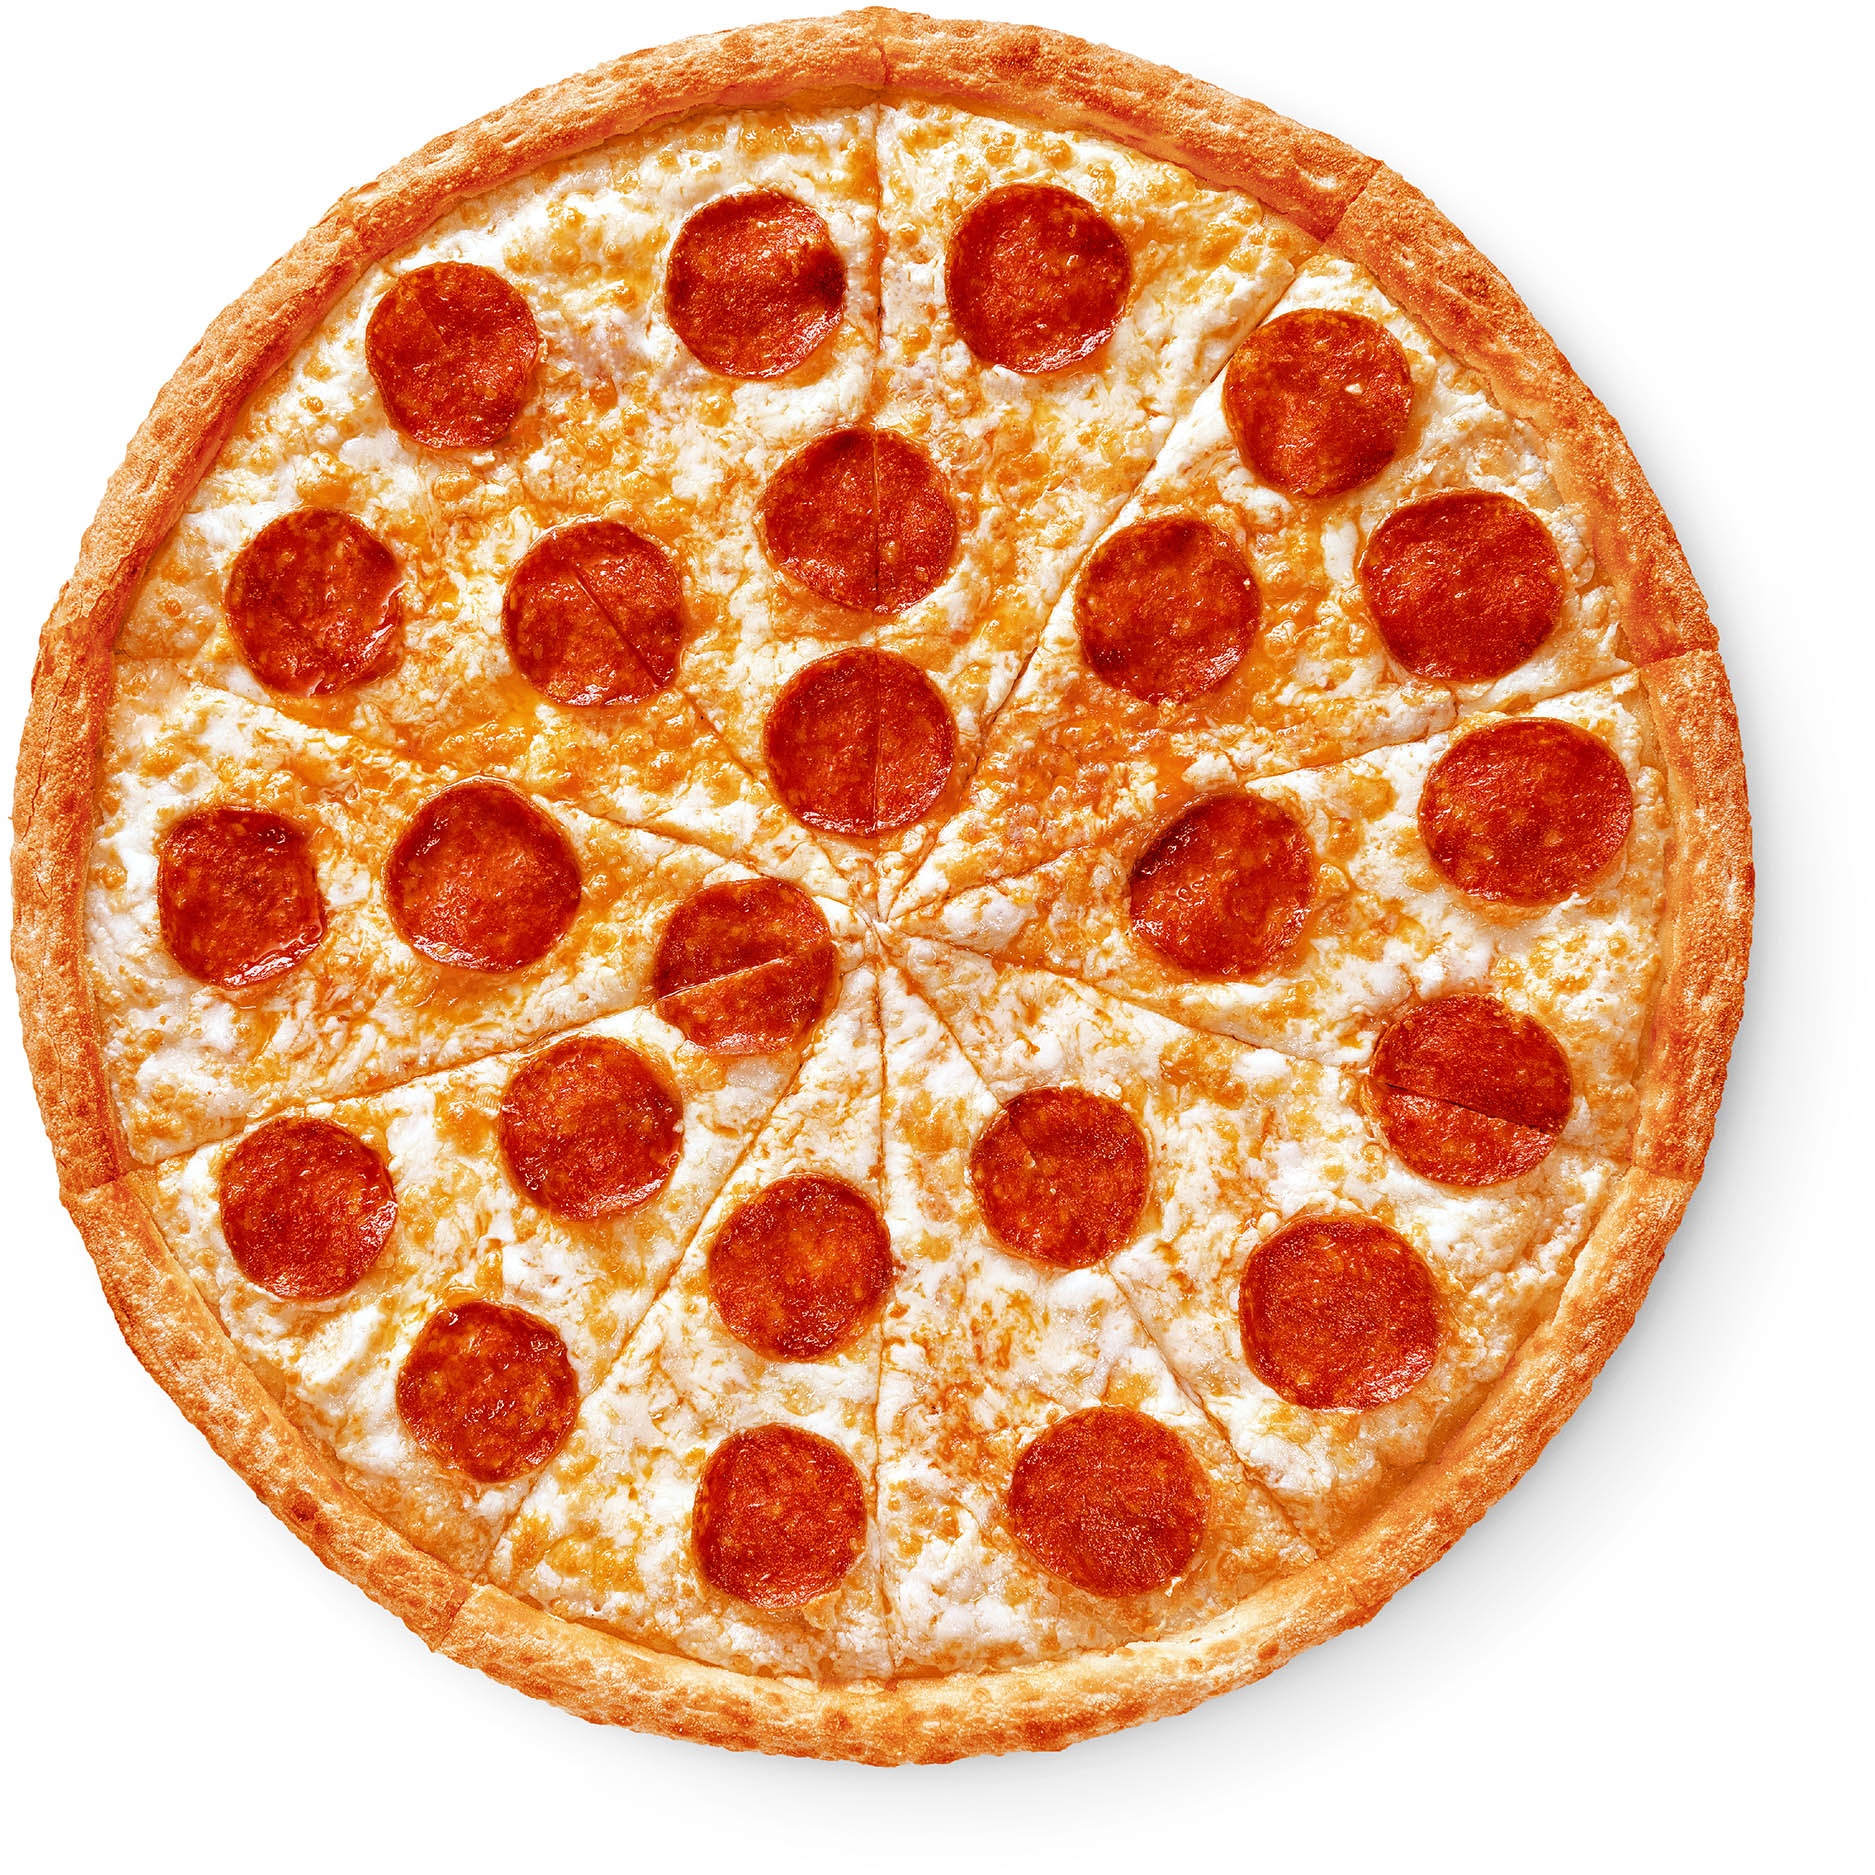 додо пицца пепперони 30 см (120) фото